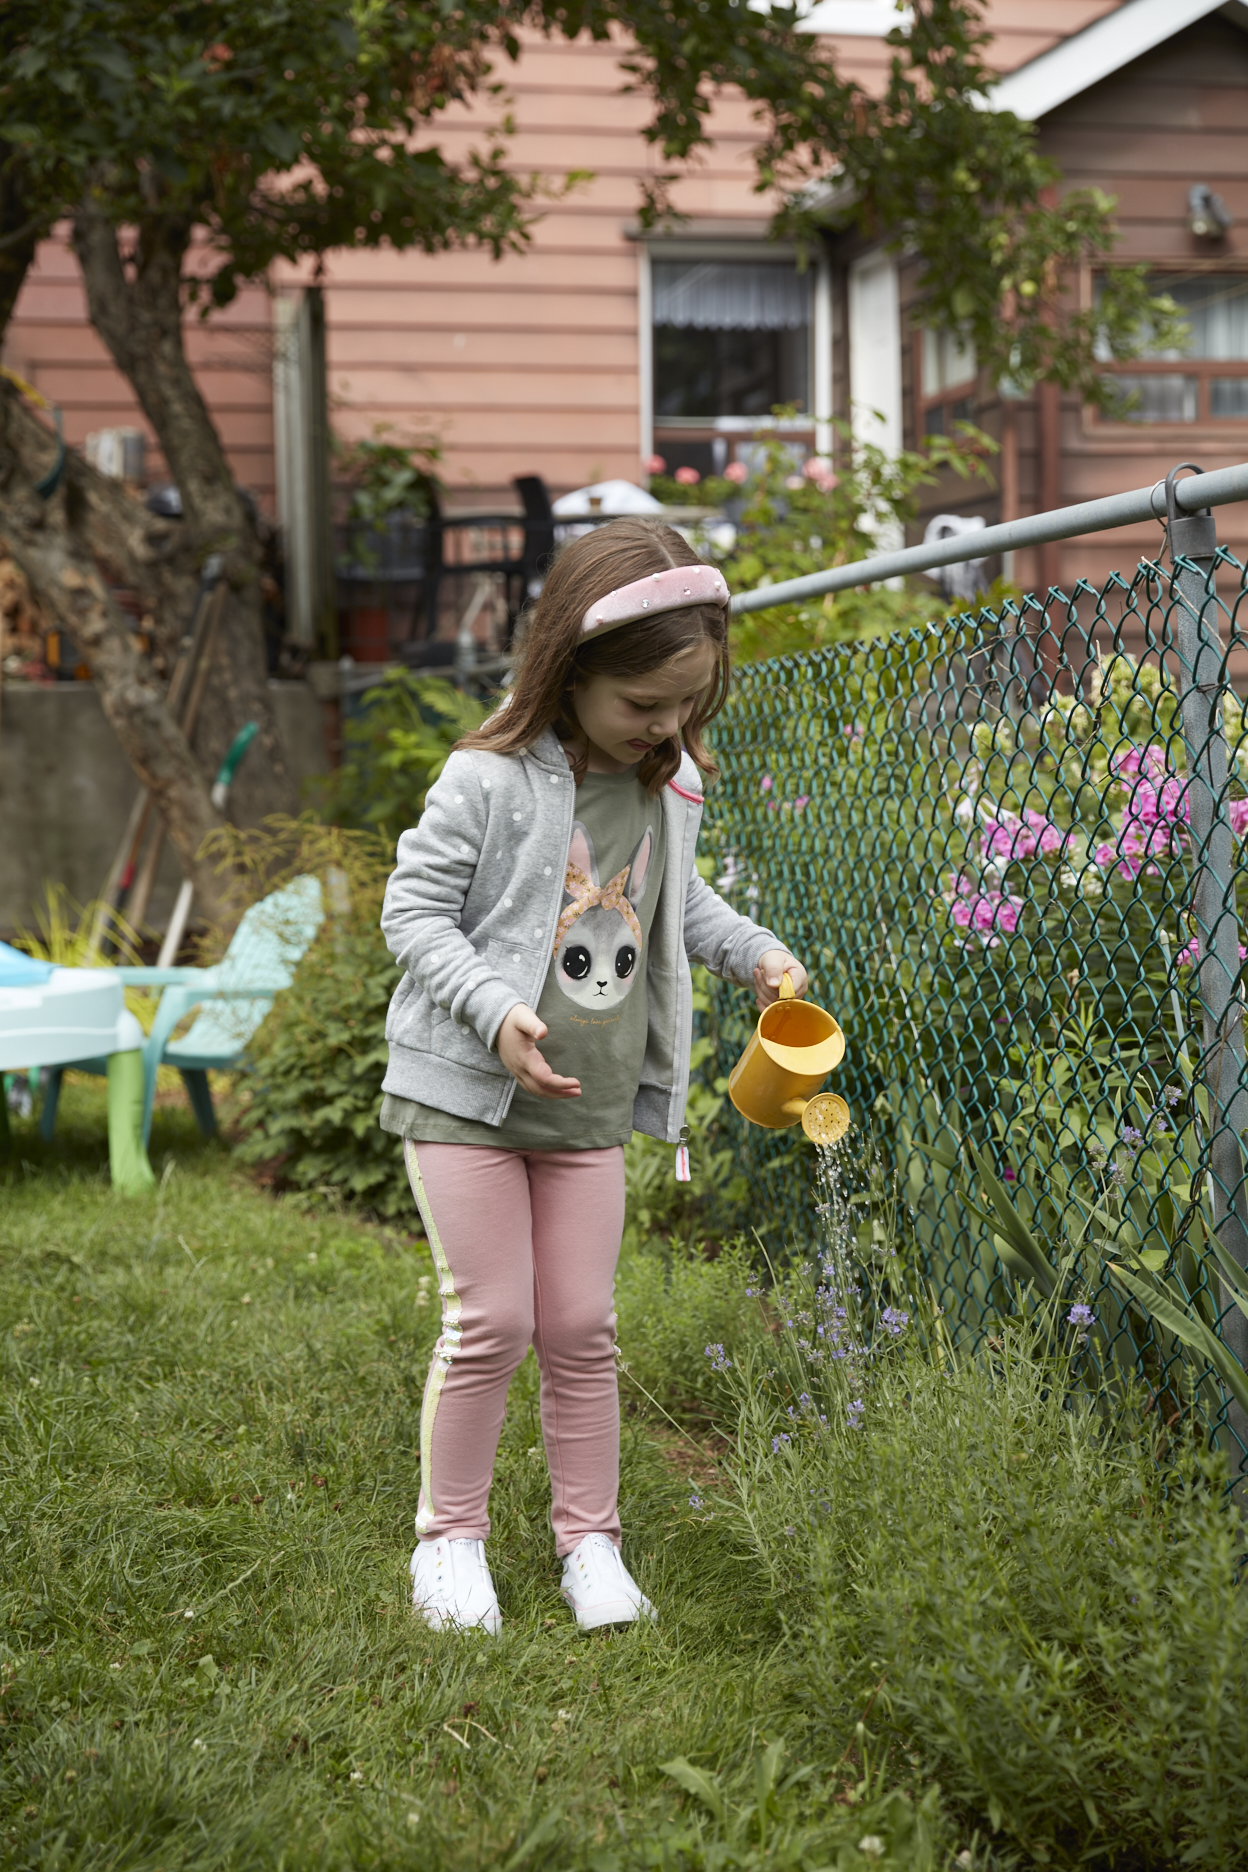 Young girl wearing pink leggings and a hoodie watering plants in backyard 